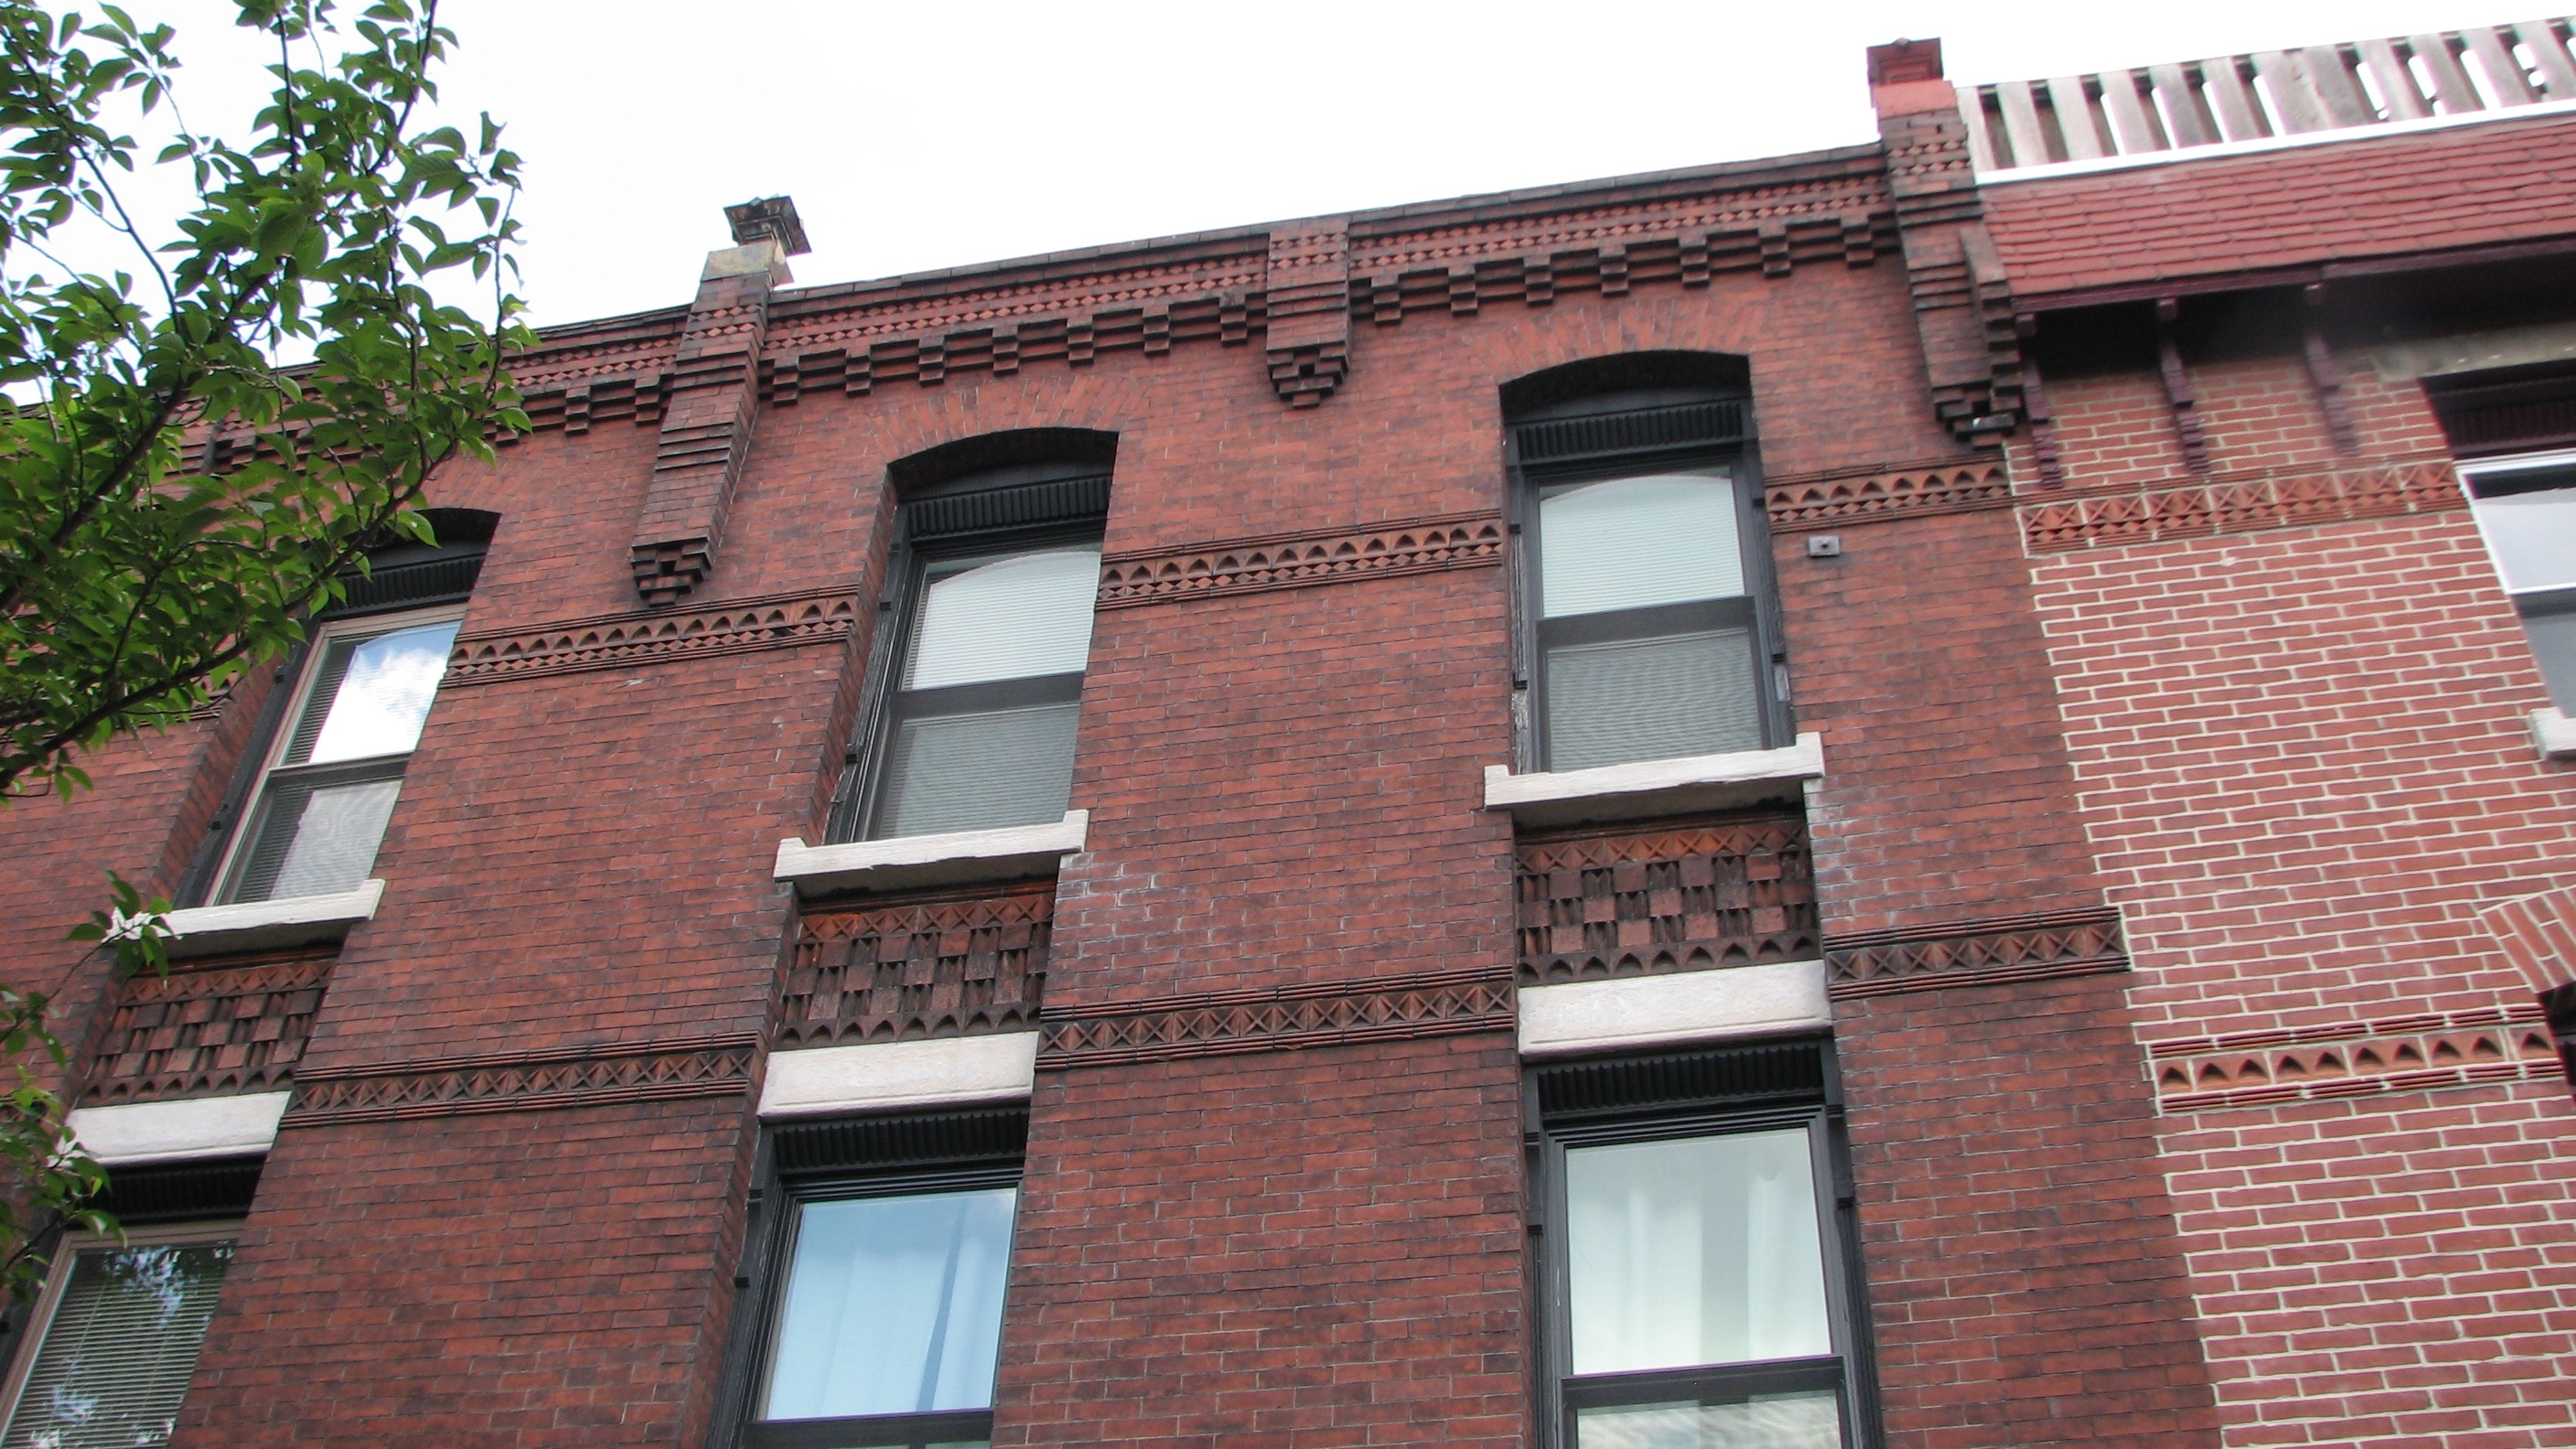 Distinctive brickwork adorns homes on North 21st Street.